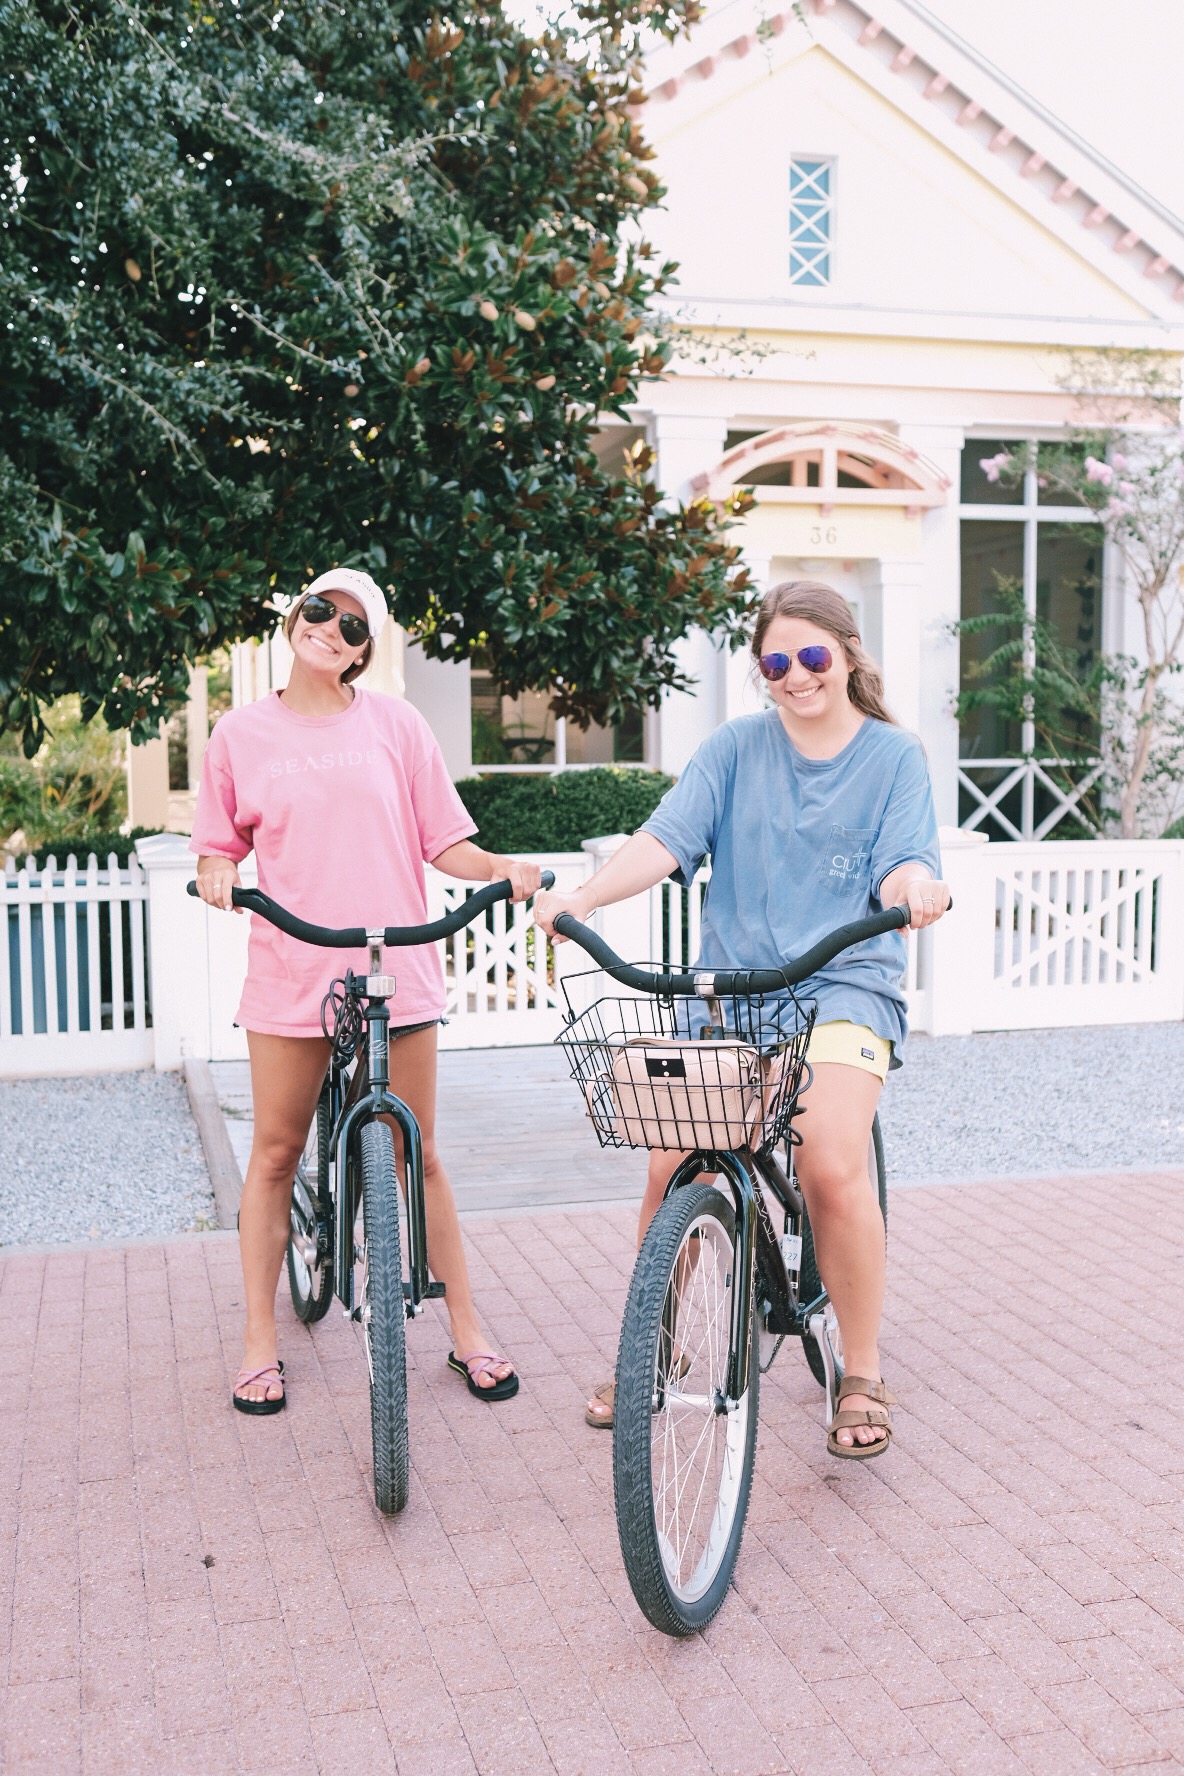 Riding bikes in Seaside | Miss Madeline Rose